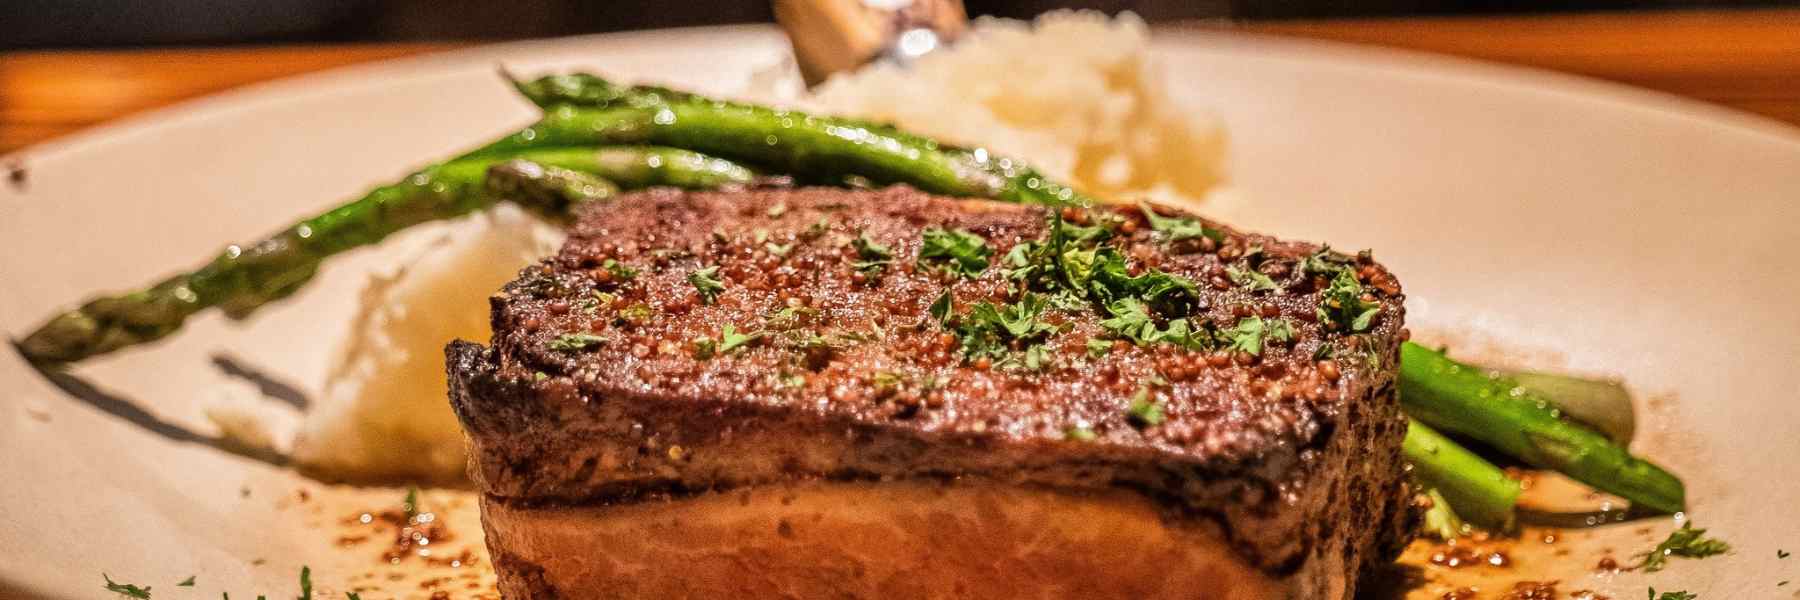 Steak Dinner In Bozeman - Copper